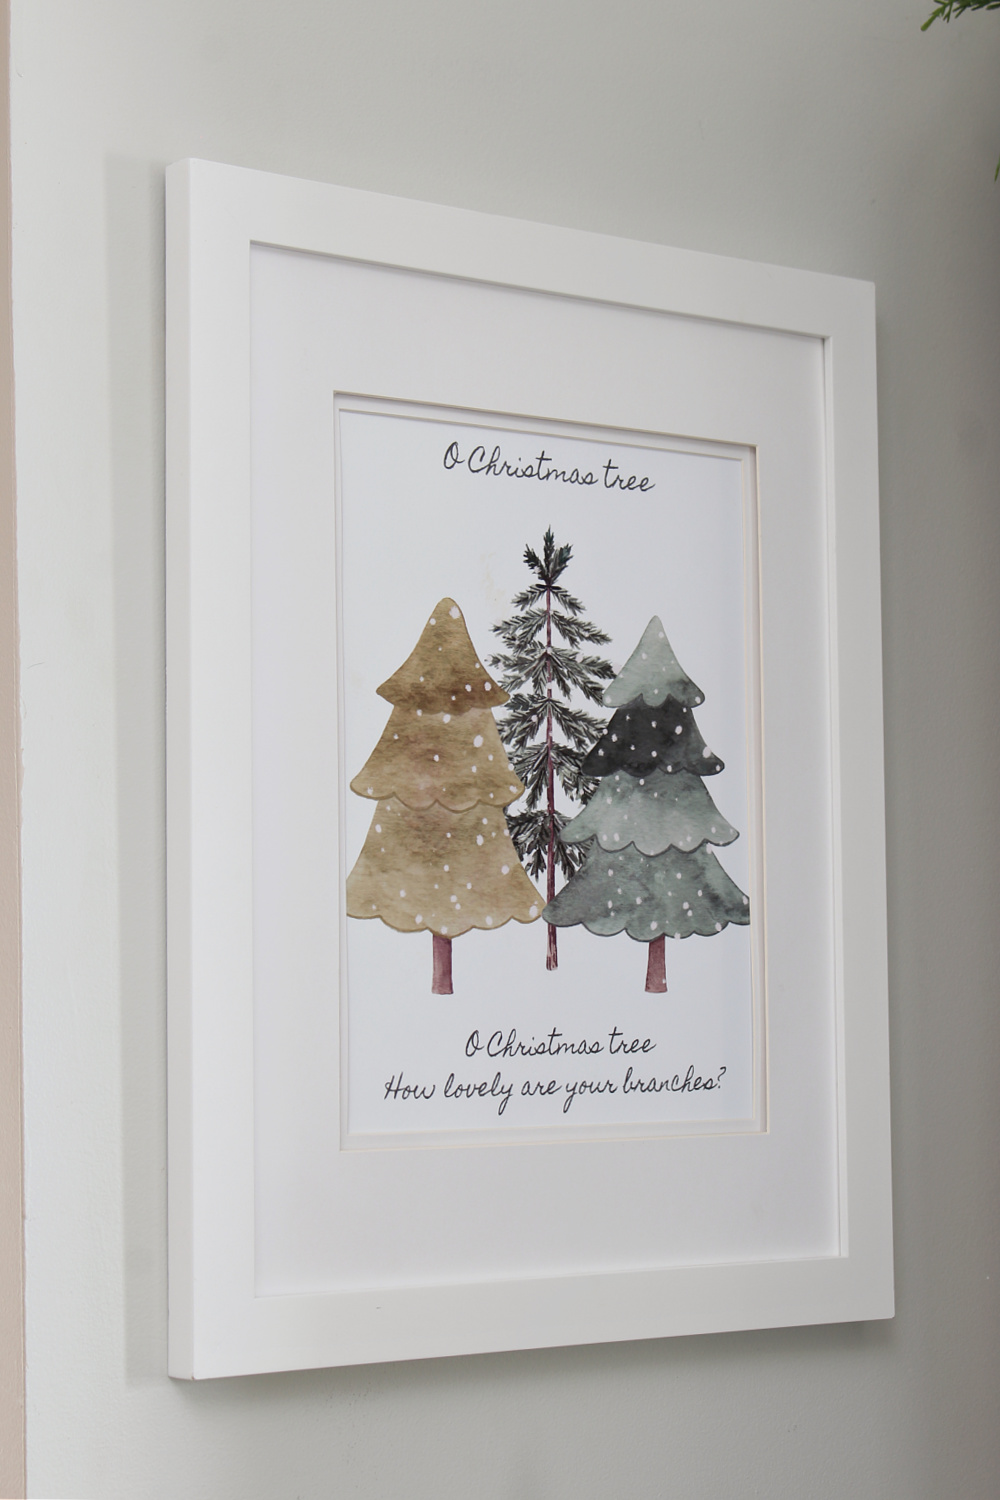 O Christmas Tree free Christmas printable hanging in a white frame.